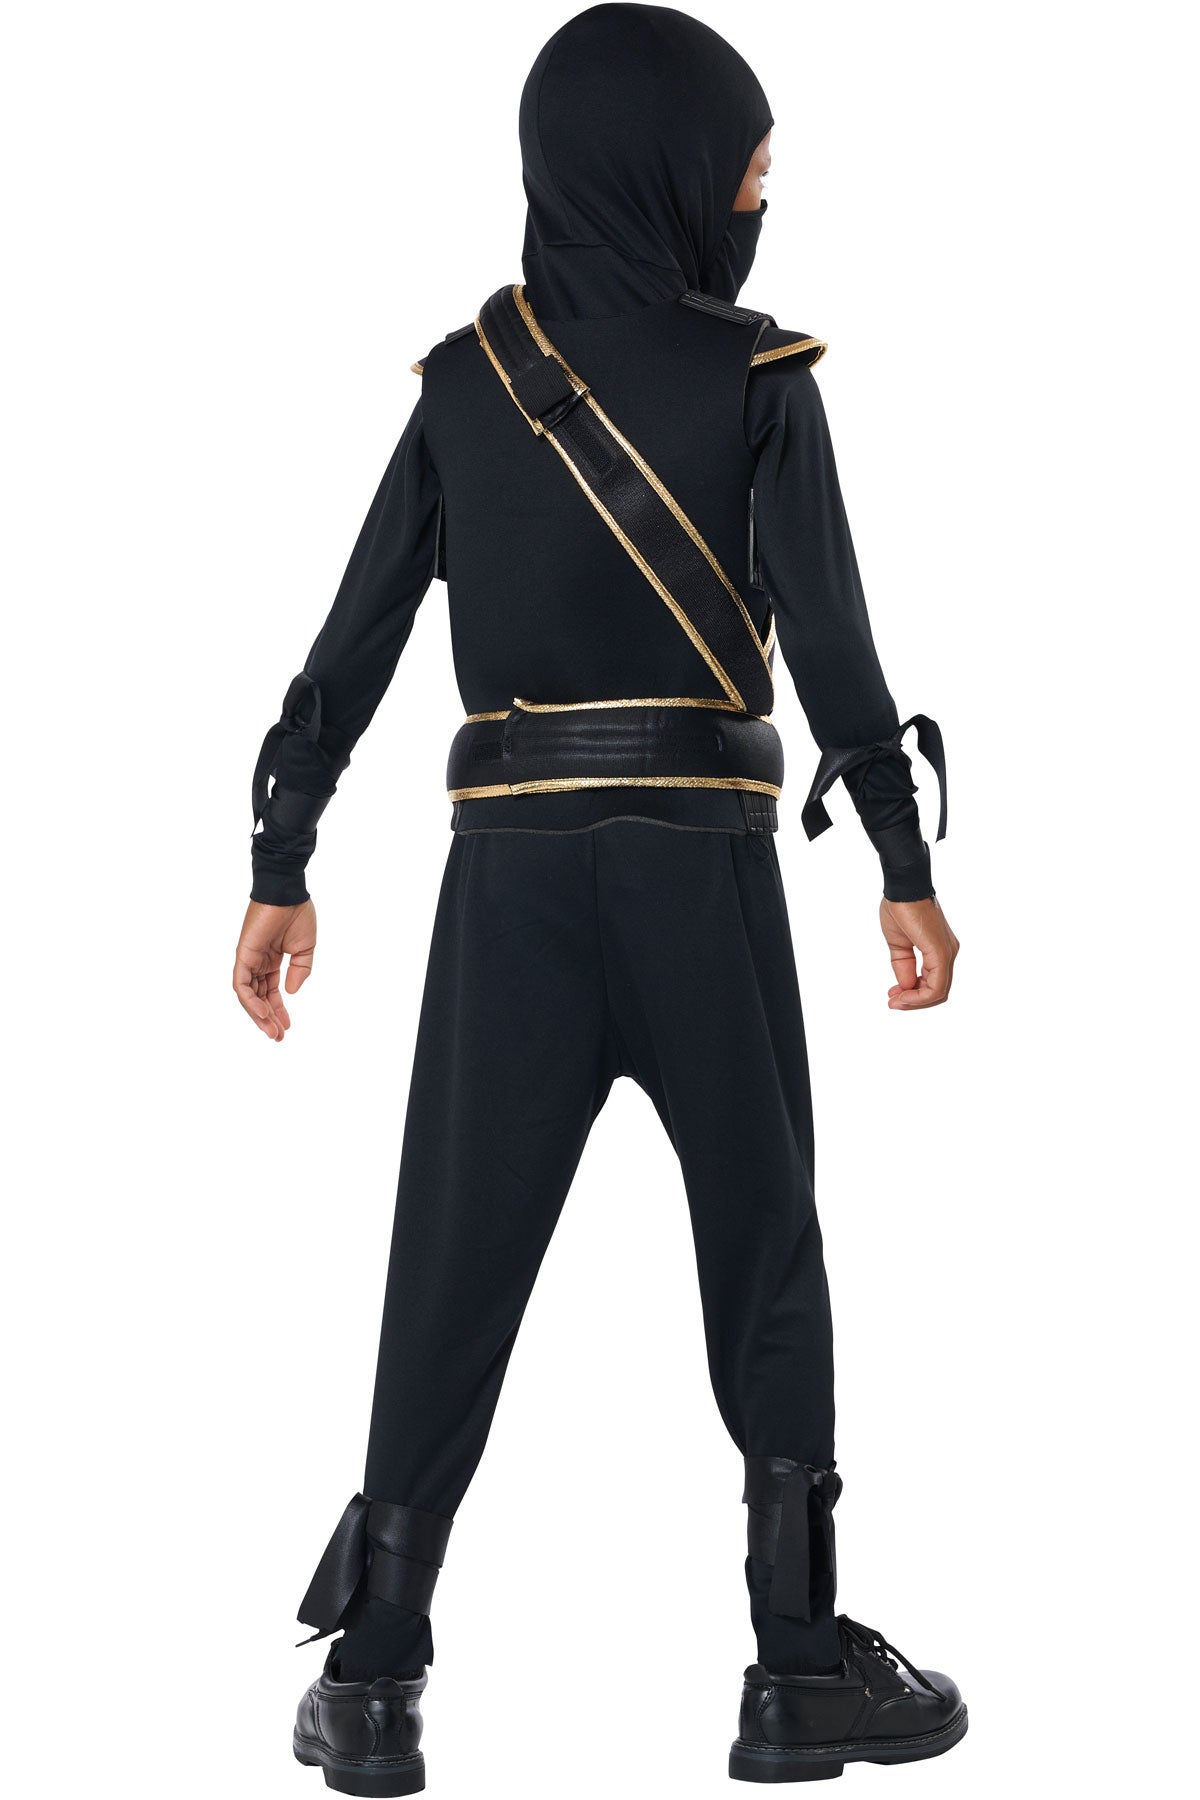 Elite Ninja / Child California Costume  3123/081